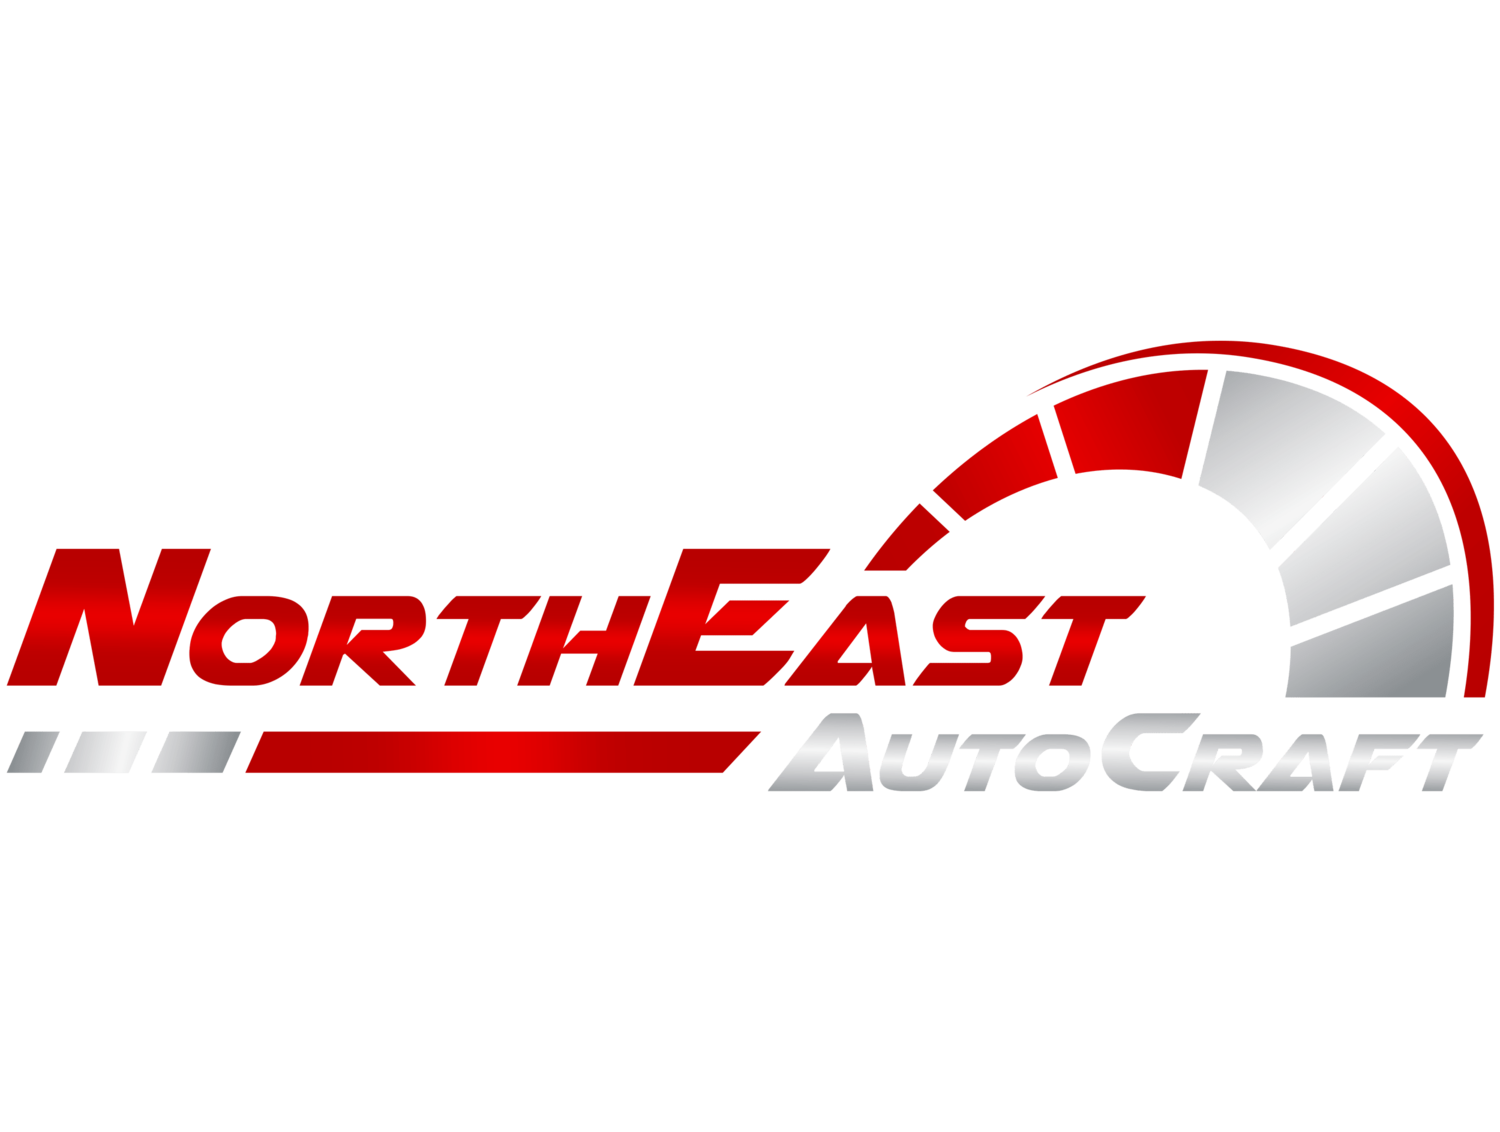 Automotive detailing Automotive performance automotive maintenance in northeastern pa scranton 